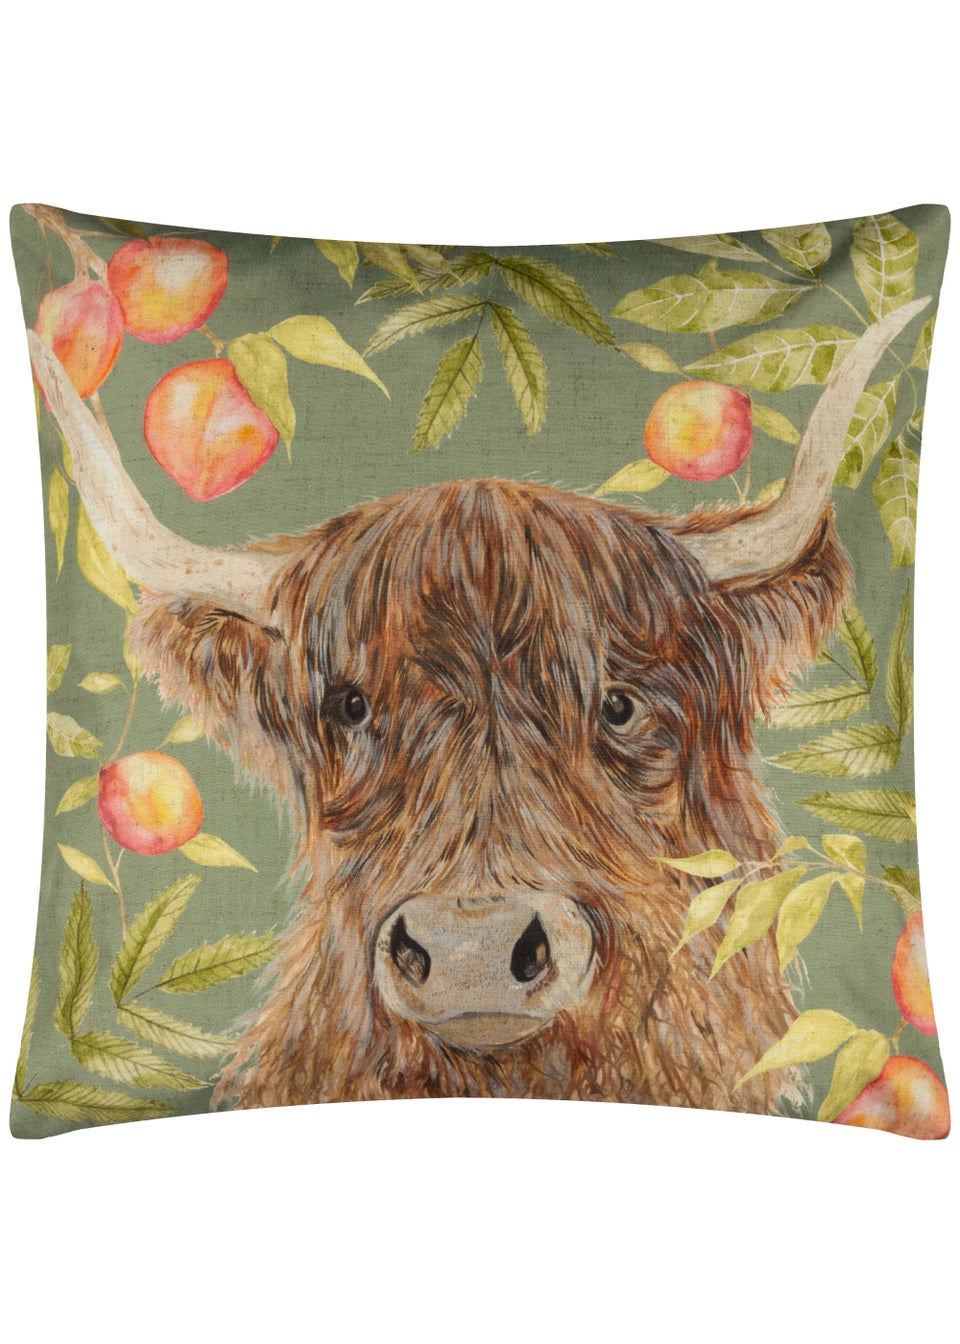 Evans Lichfield Grove Highland Cow Outdoor Filled Cushion (43cm x 43cm x 8cm)